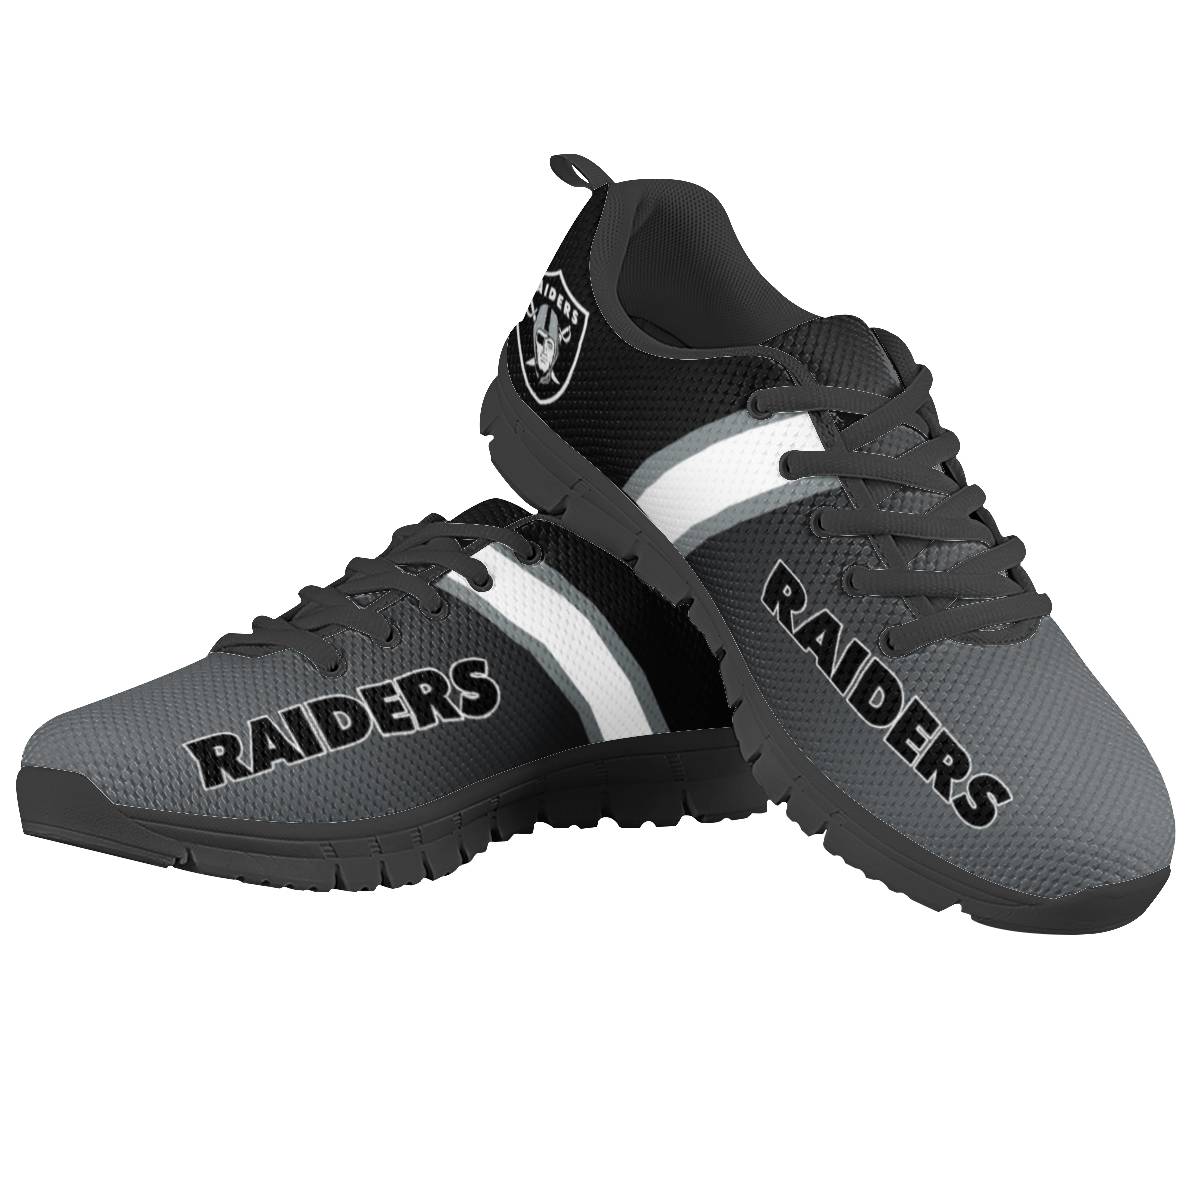 Men's Las Vegas Raiders AQ Running Shoes 002